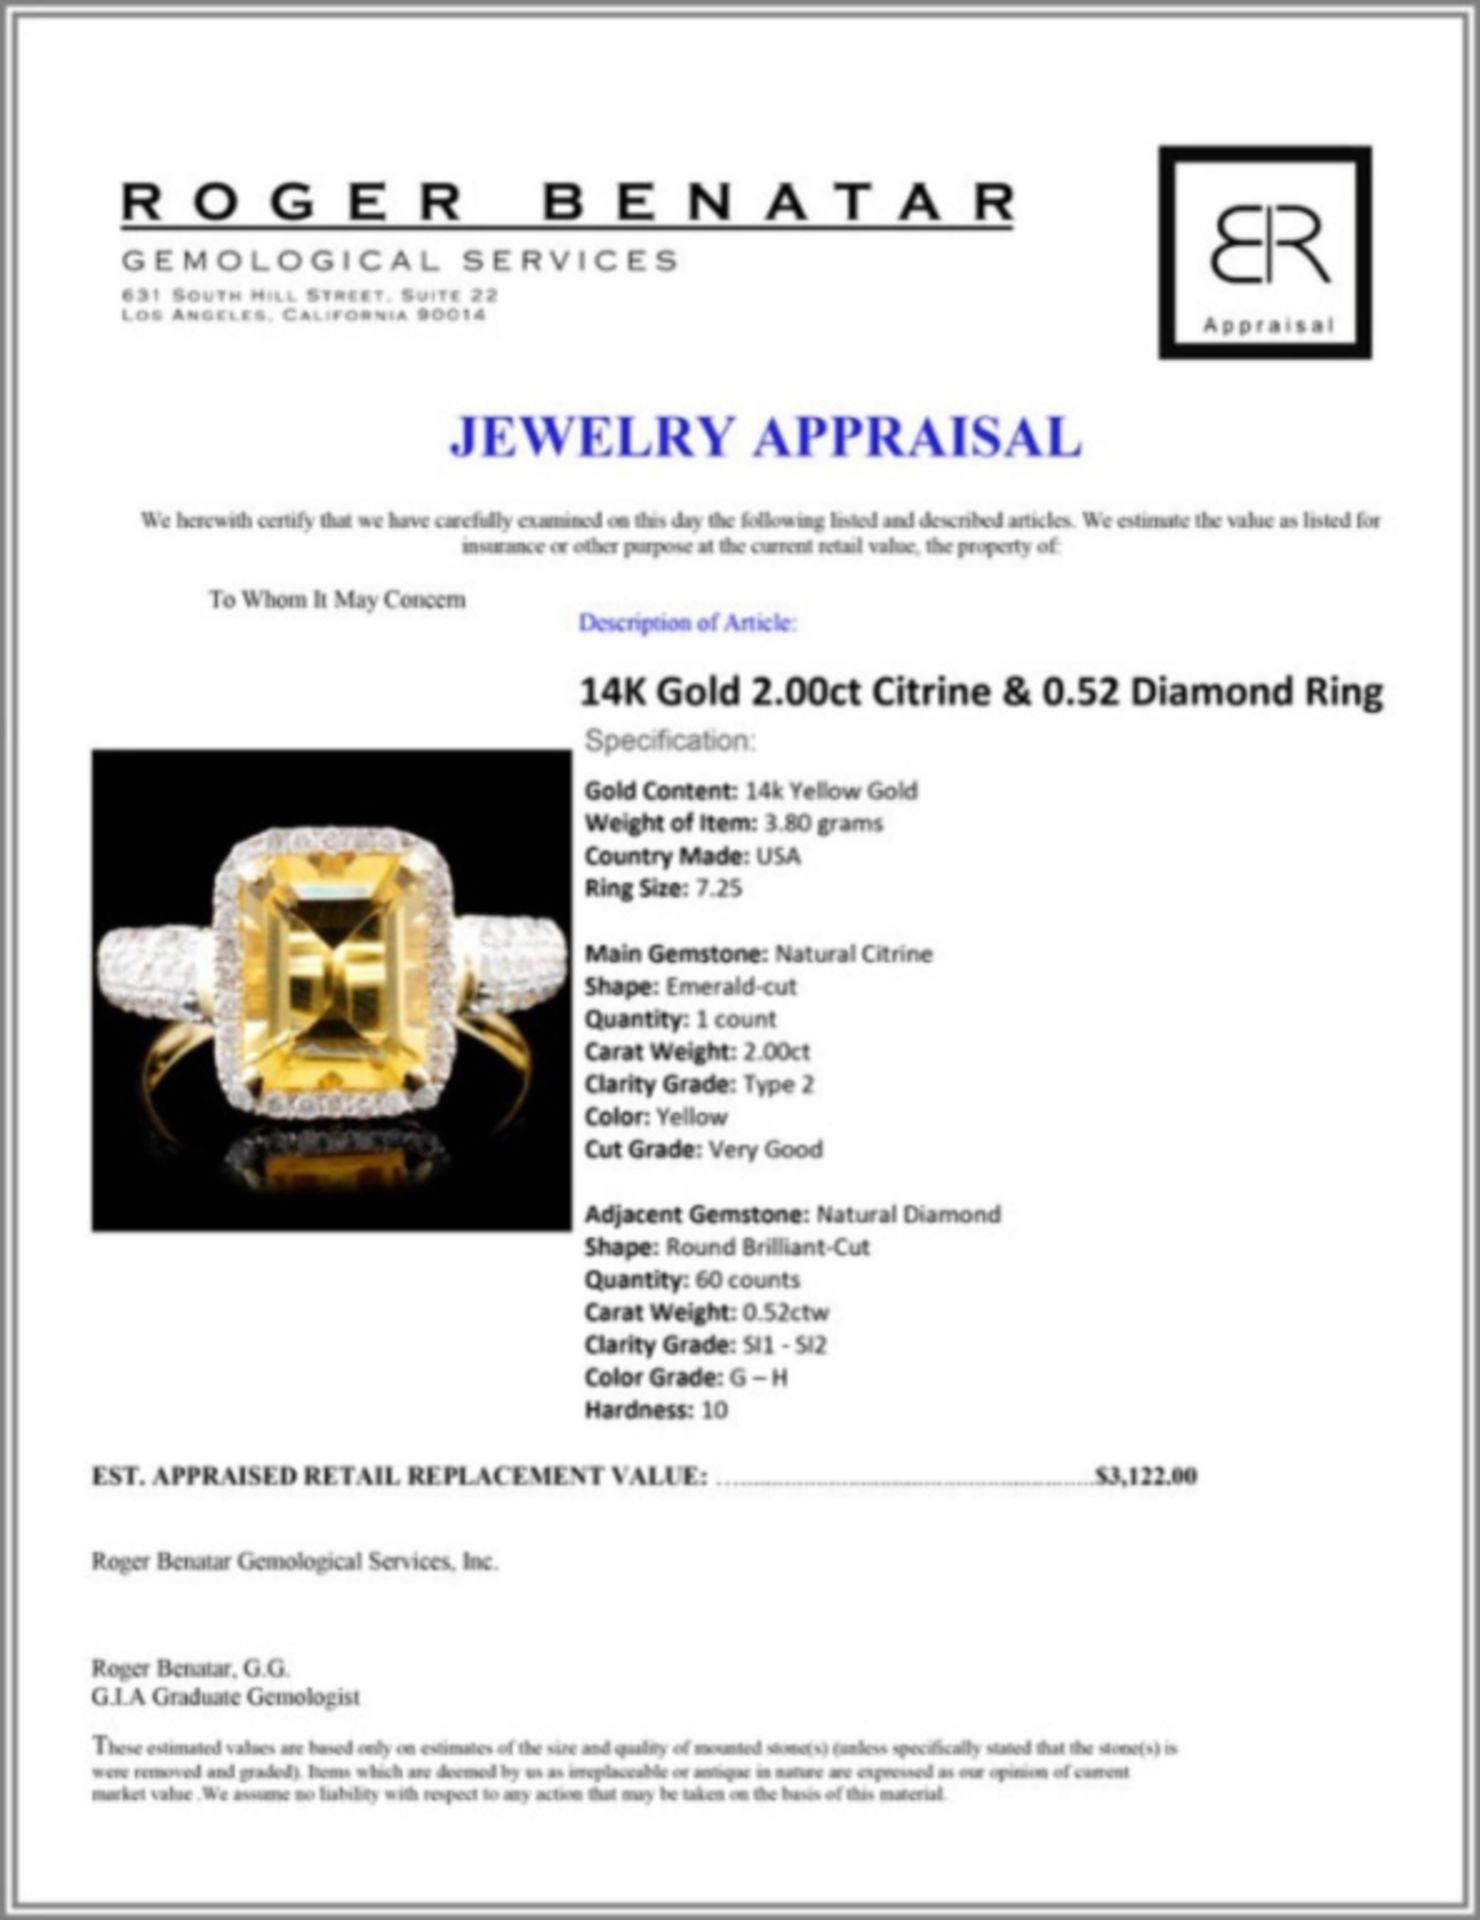 14K Gold 2.00ct Citrine & 0.52 Diamond Ring - Image 5 of 5